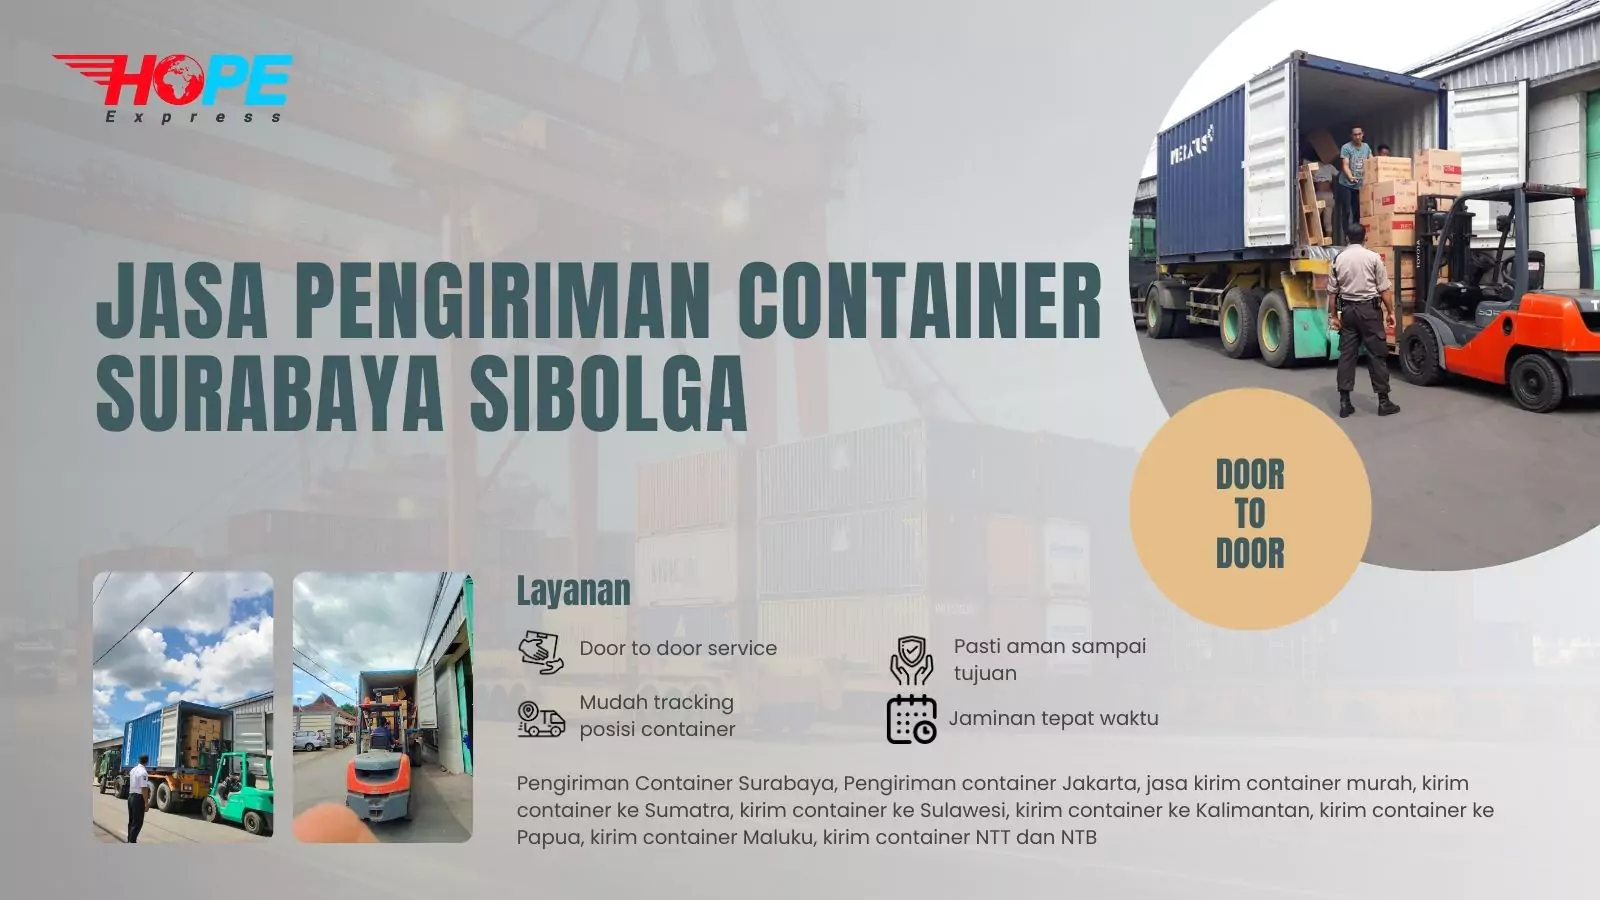 Jasa Pengiriman Container Surabaya Sibolga